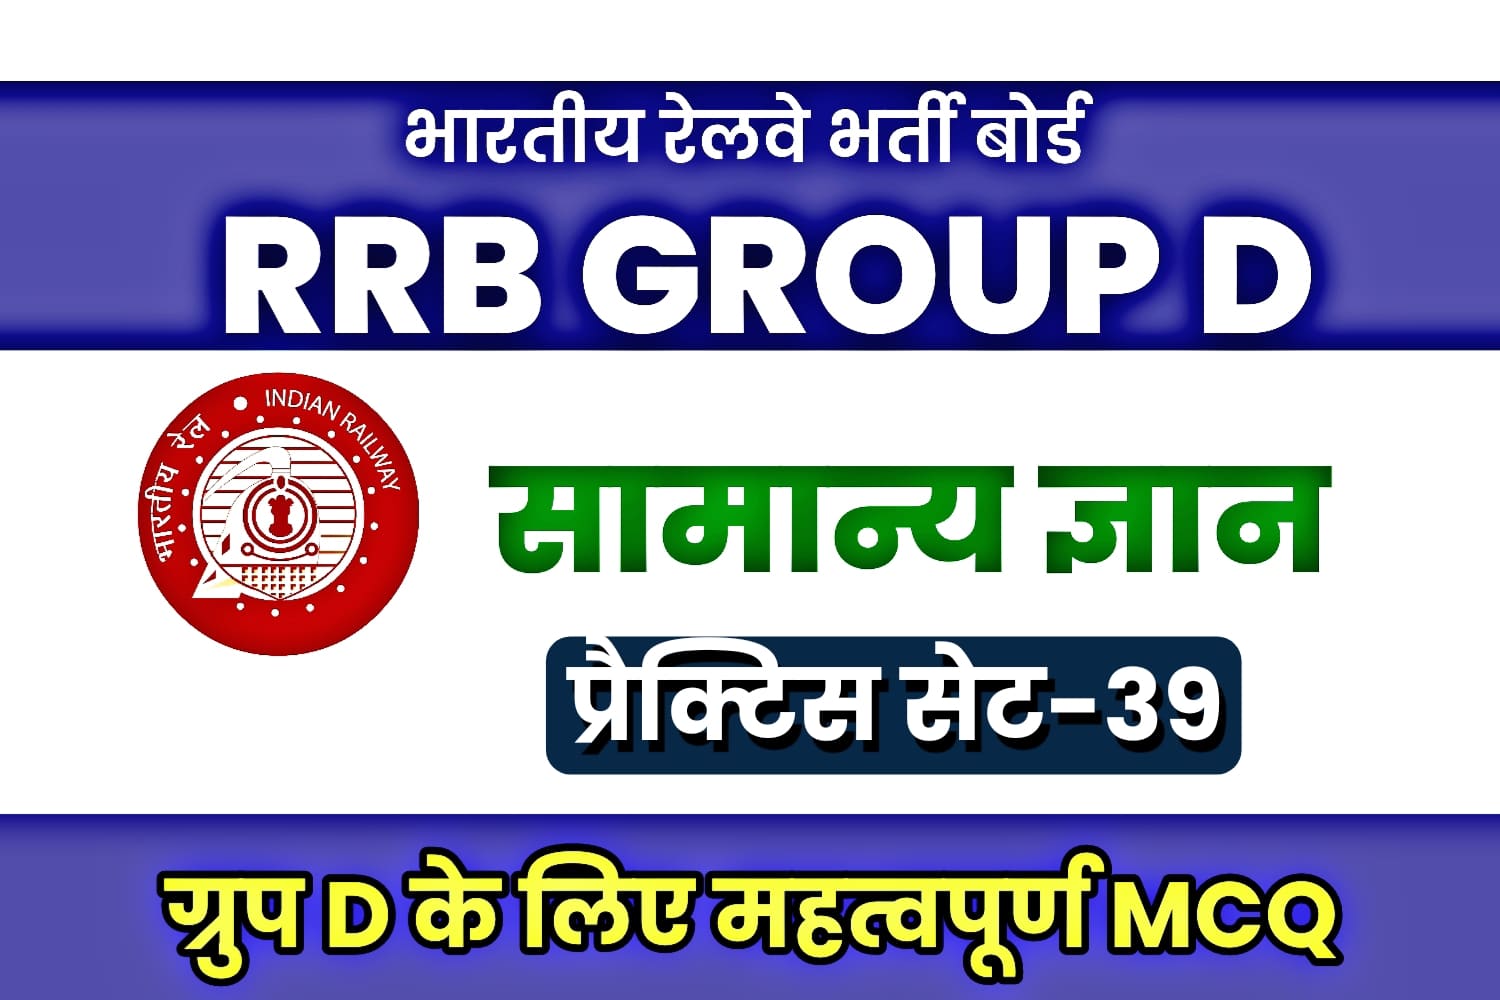 RRB Group D General Knowledge Practice set-39 